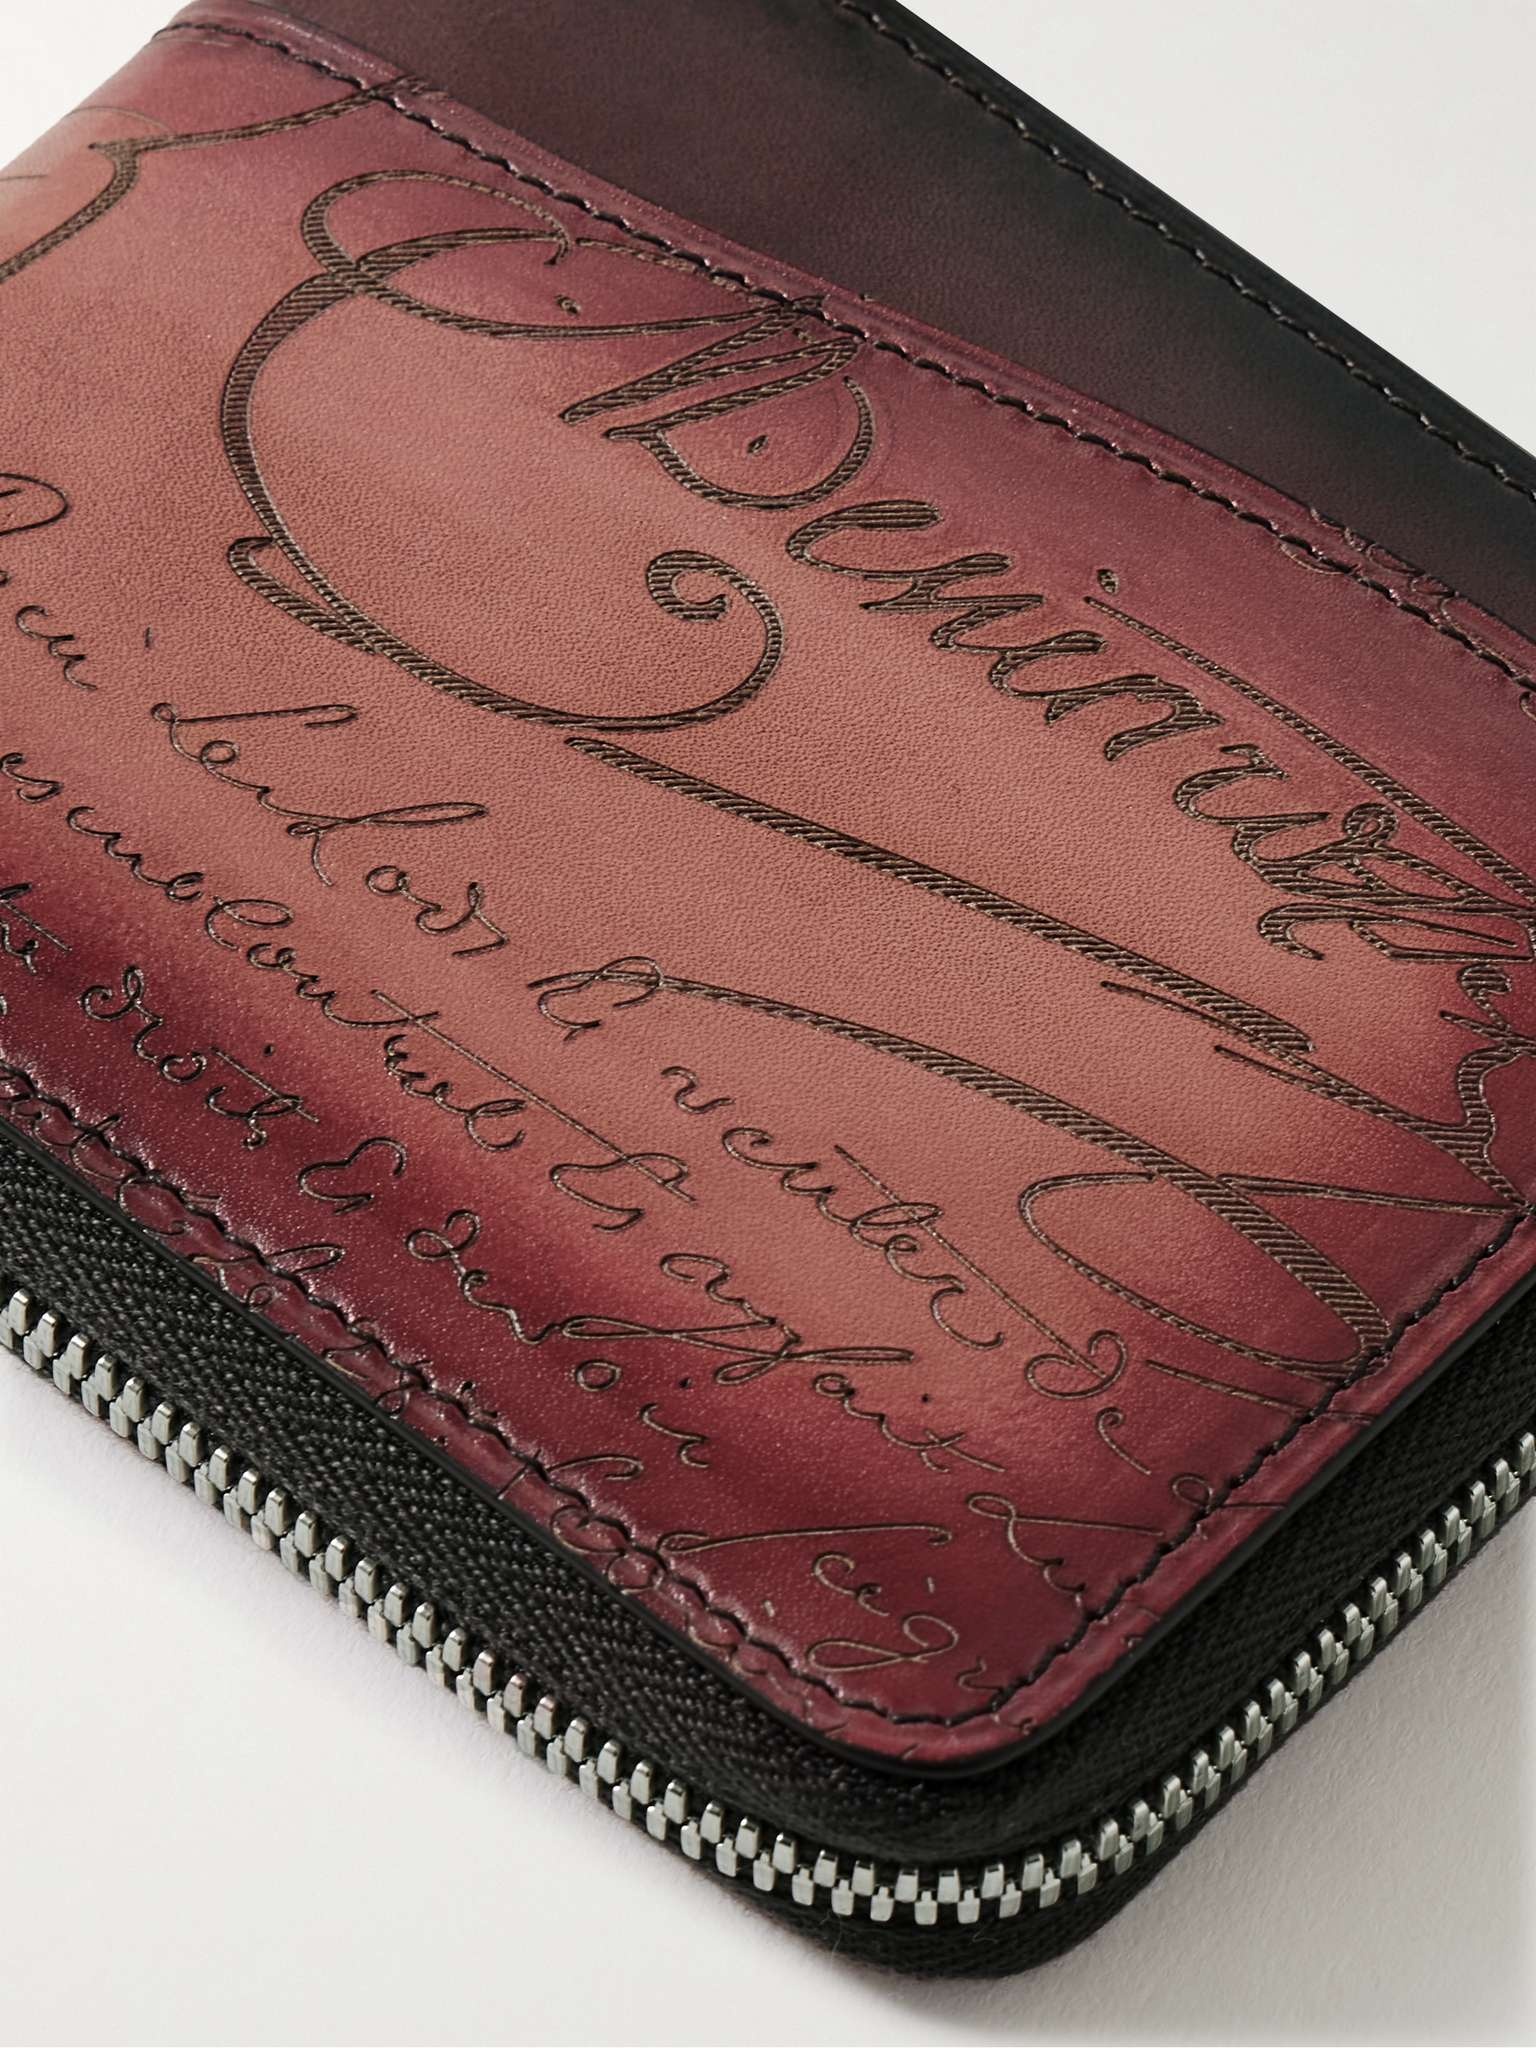 Itauba Scritto Venezia Leather Zip-Around Wallet - 4